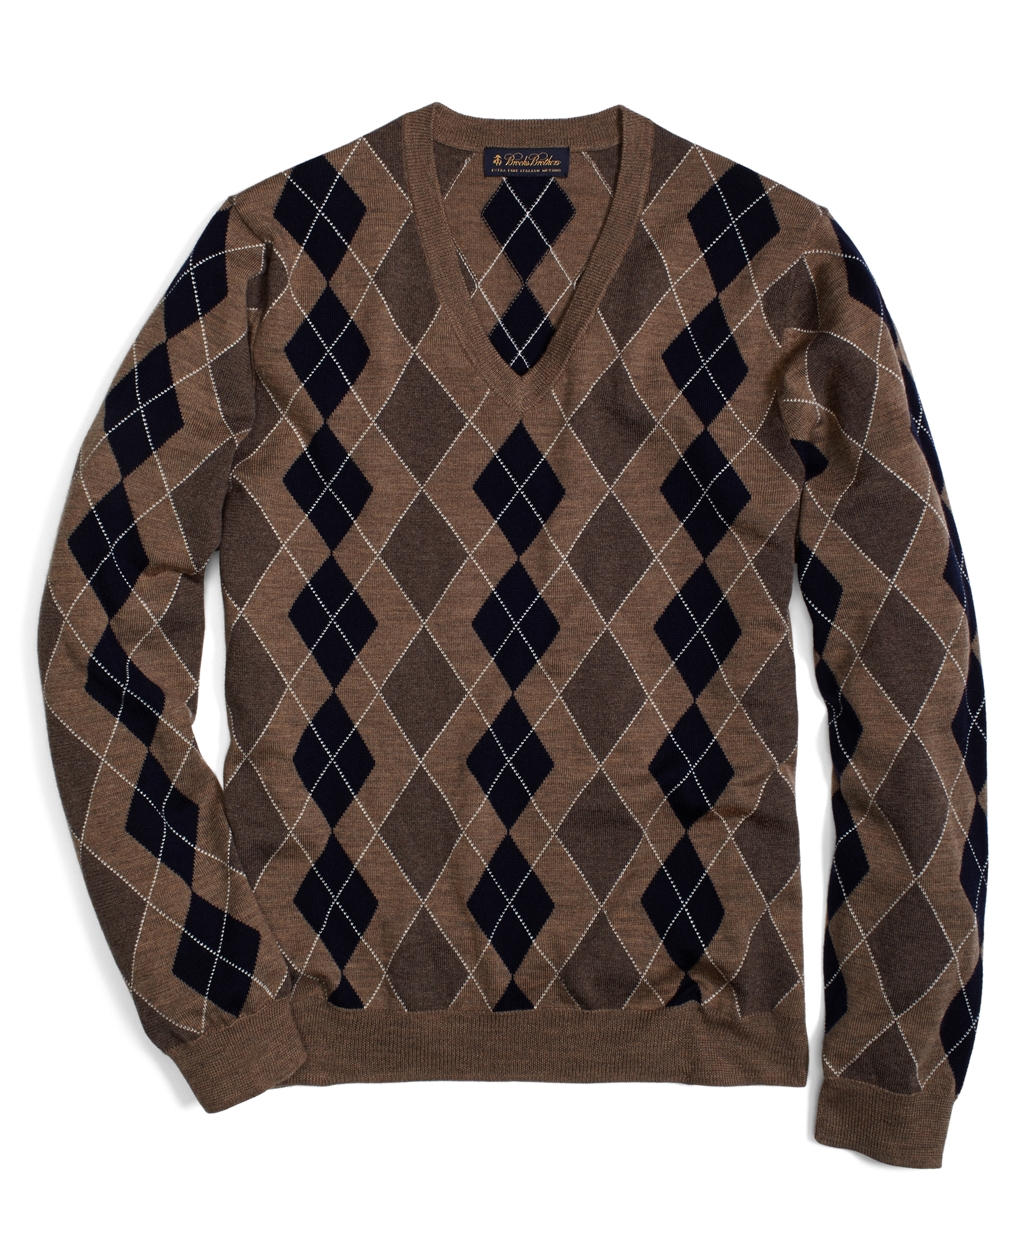 Lyst - Brooks Brothers Merino Argyle V-neck Sweater in Brown for Men